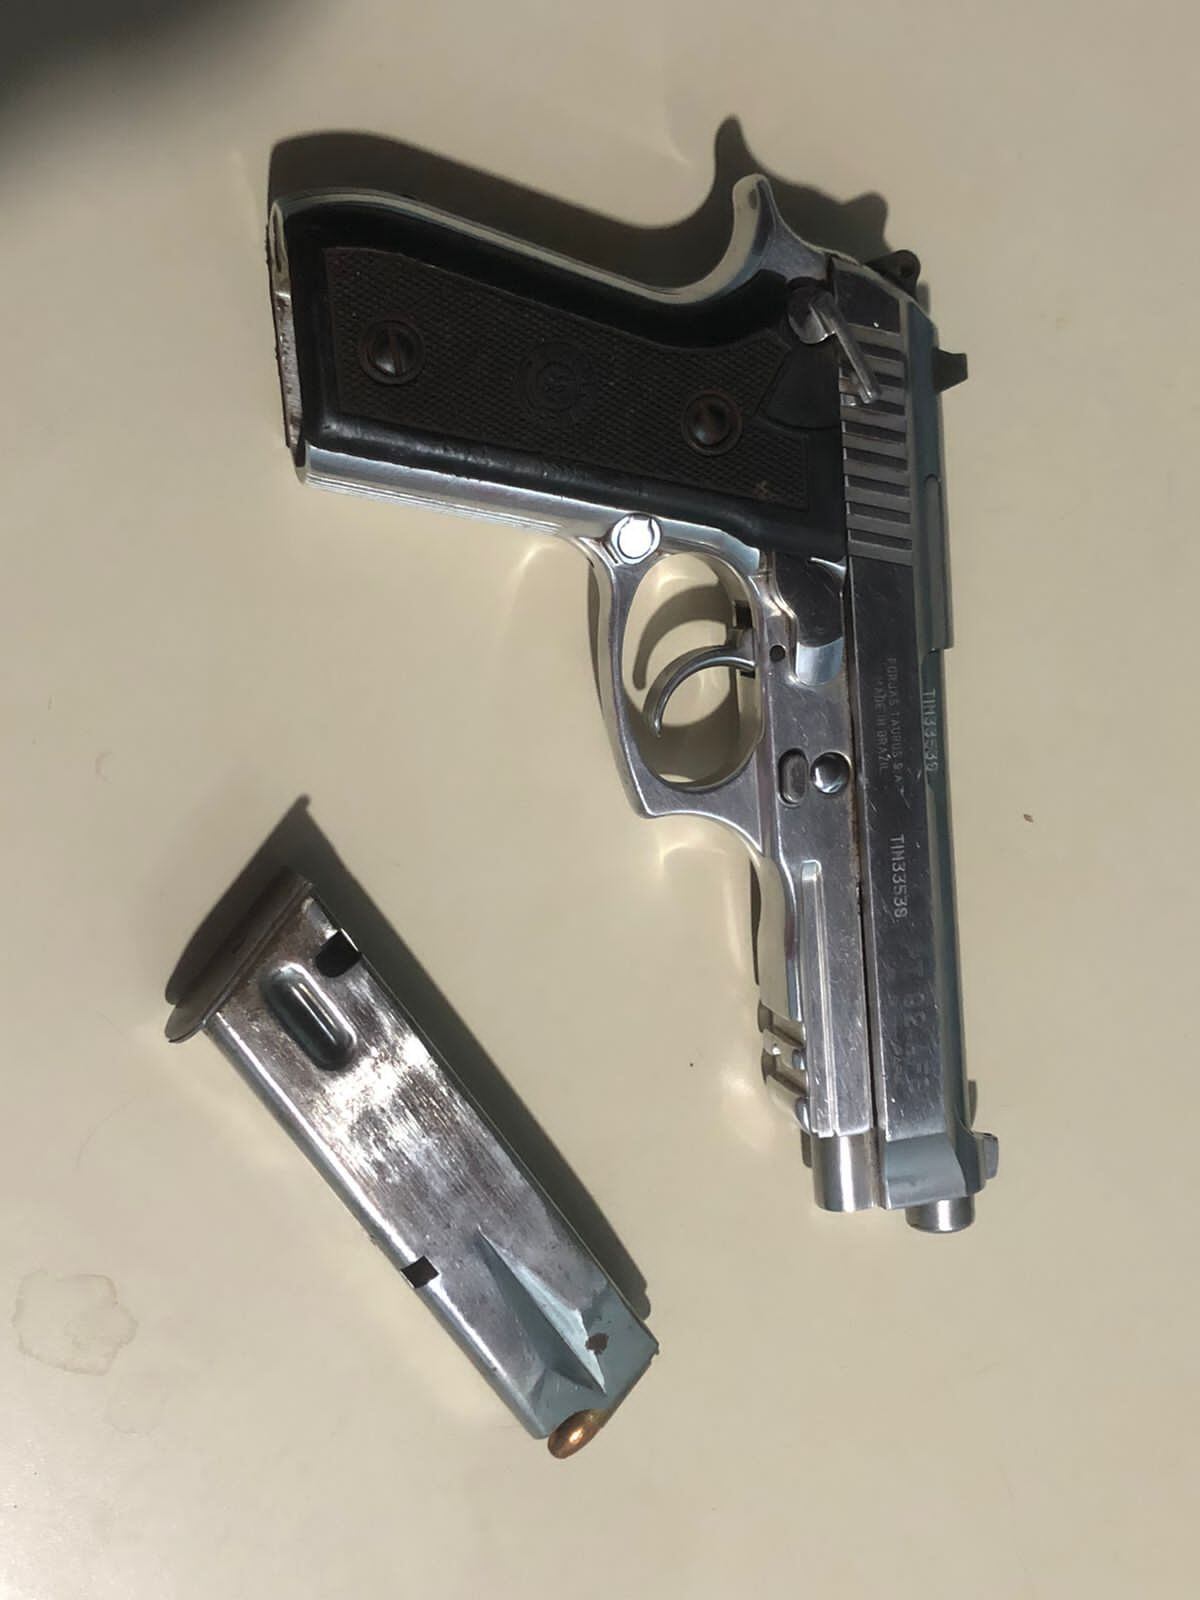 En poder del detenido se encontró una pistola Taurus PT92 calibre 9 mm.